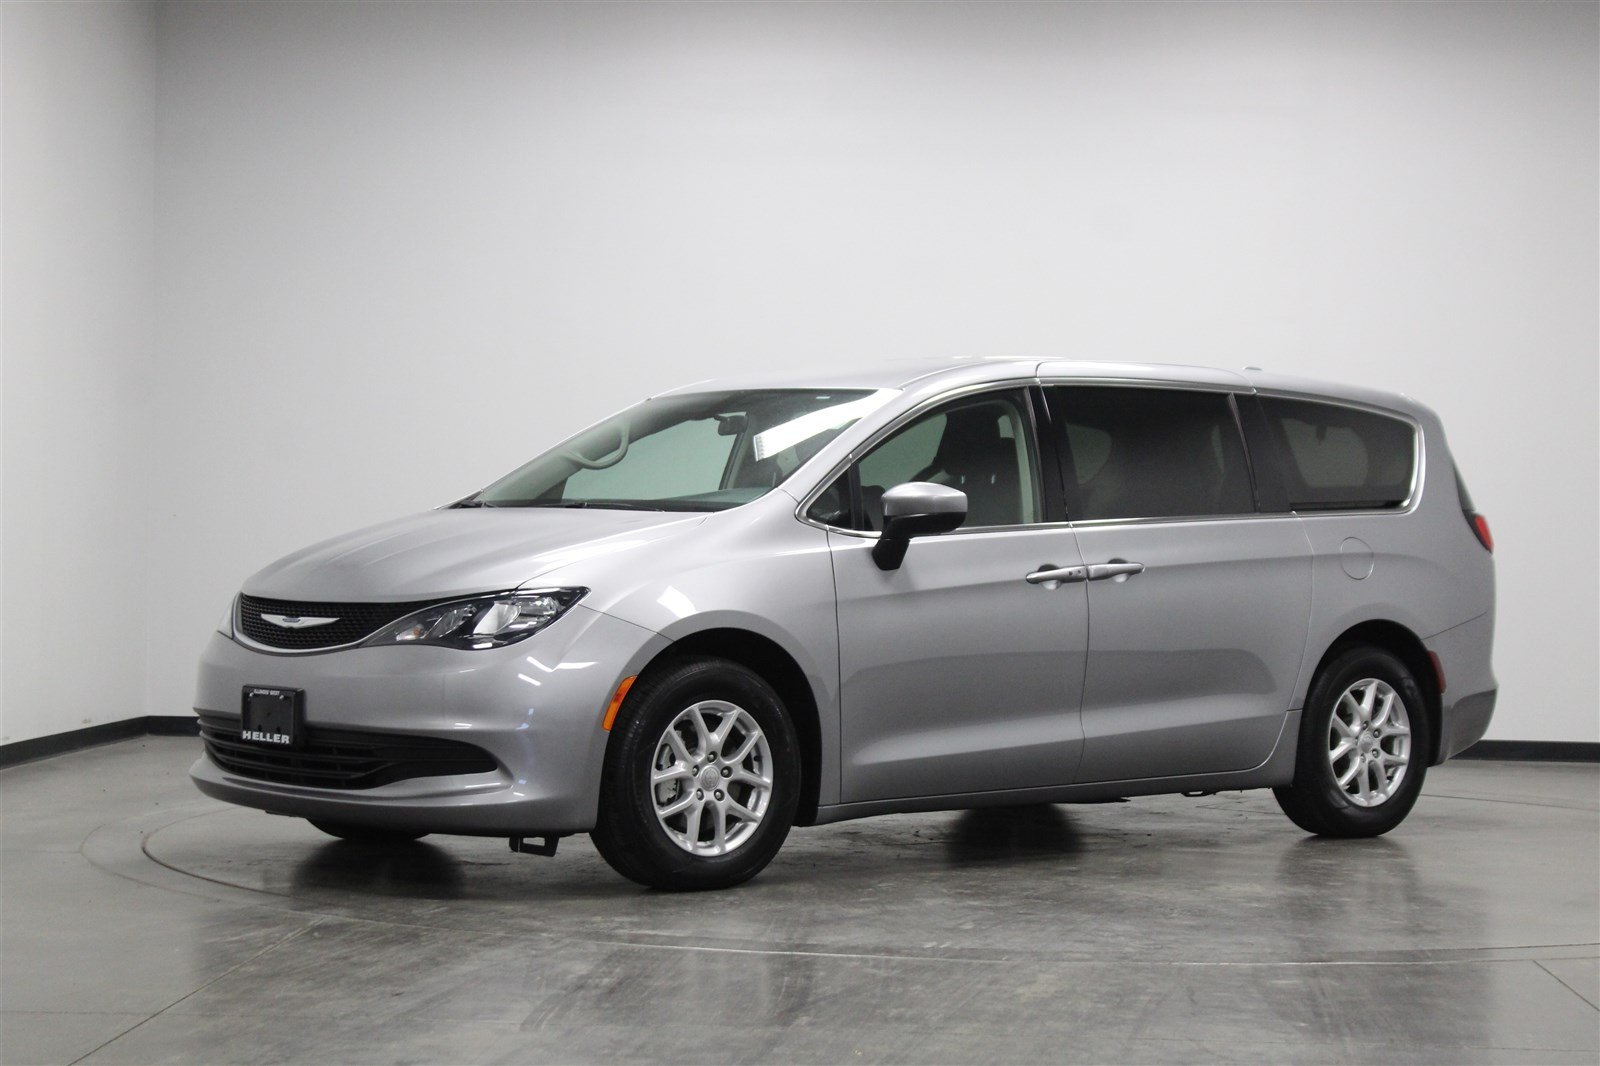 PreOwned 2018 Chrysler Pacifica LX Minivan, Passenger in